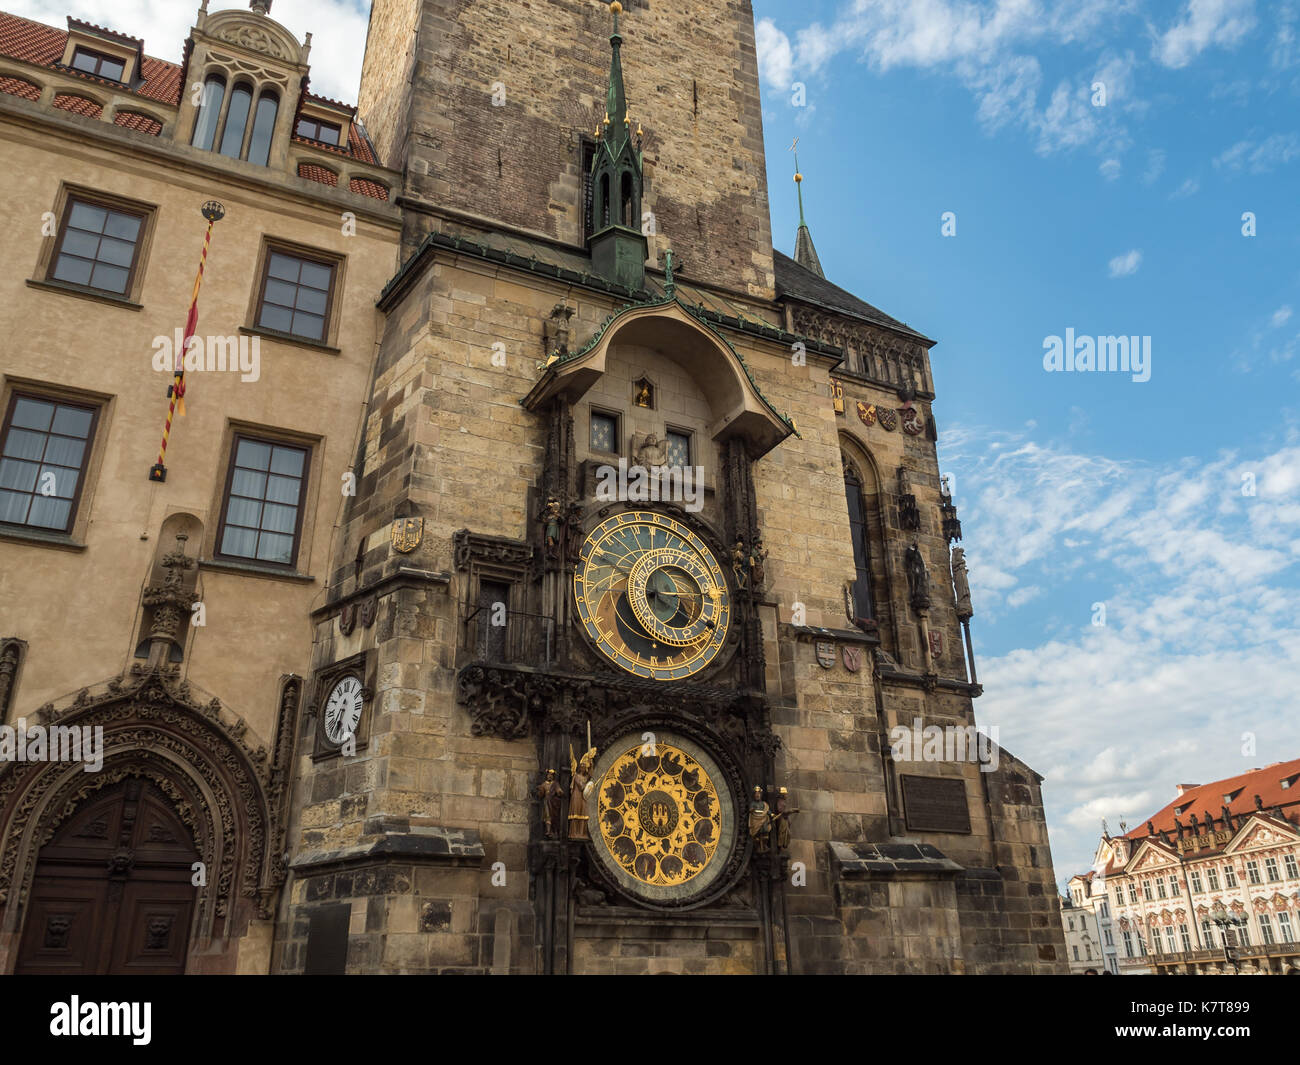 Astronomical clock tower at Prague old town square, Prague, Czech Republic. Stock Photo